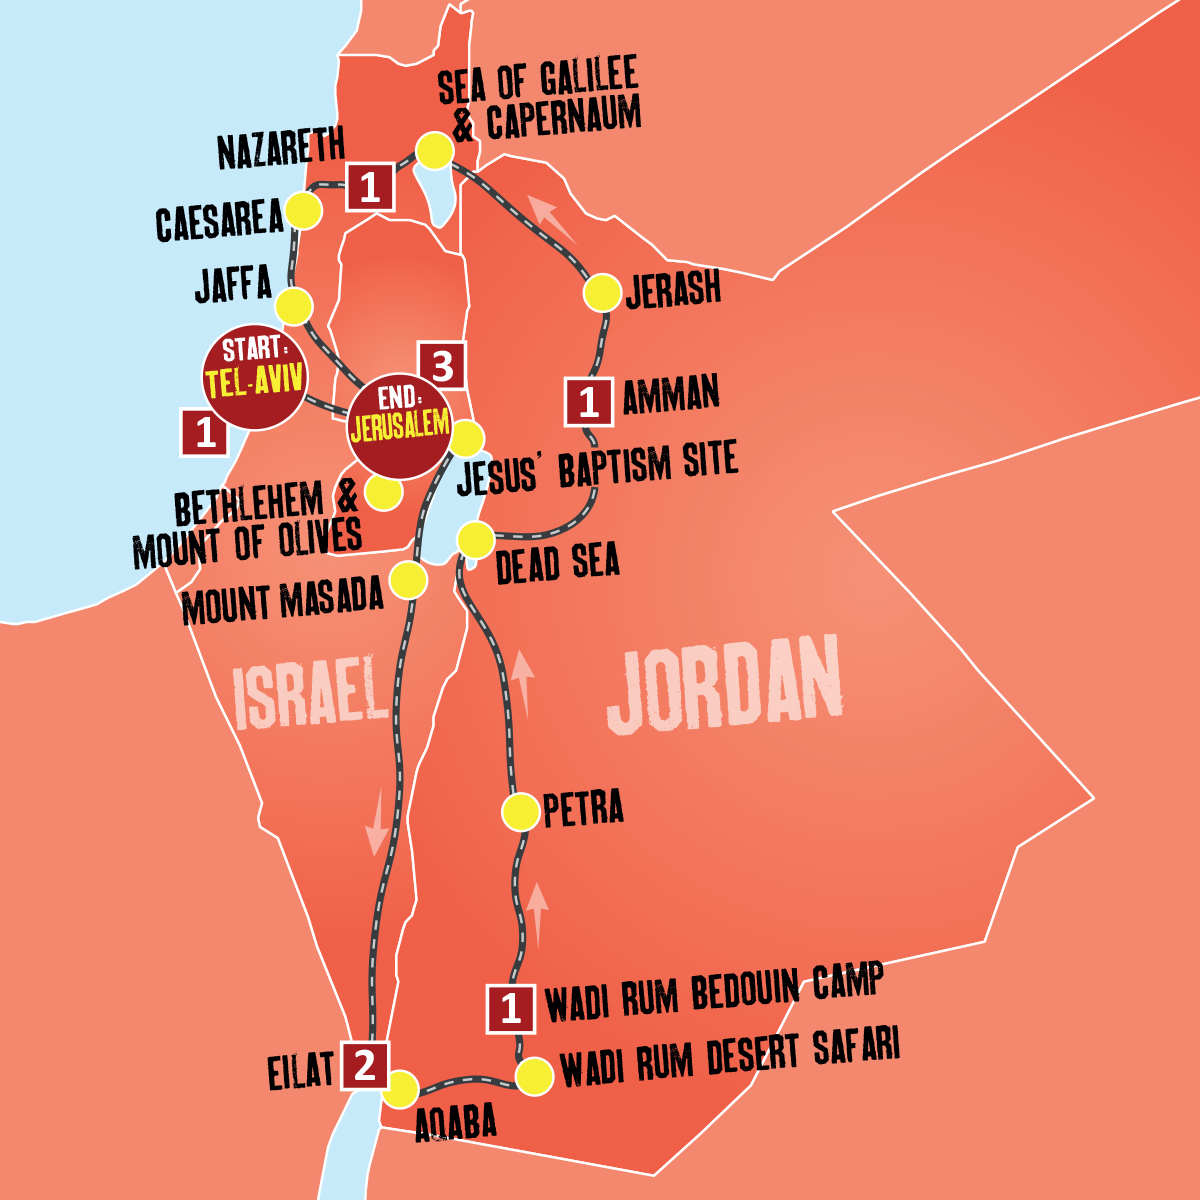 Maleri Tilstand Lima Book Highlights of Israel & Jordan Tour - Wadi Rum Camp - Expat Explore